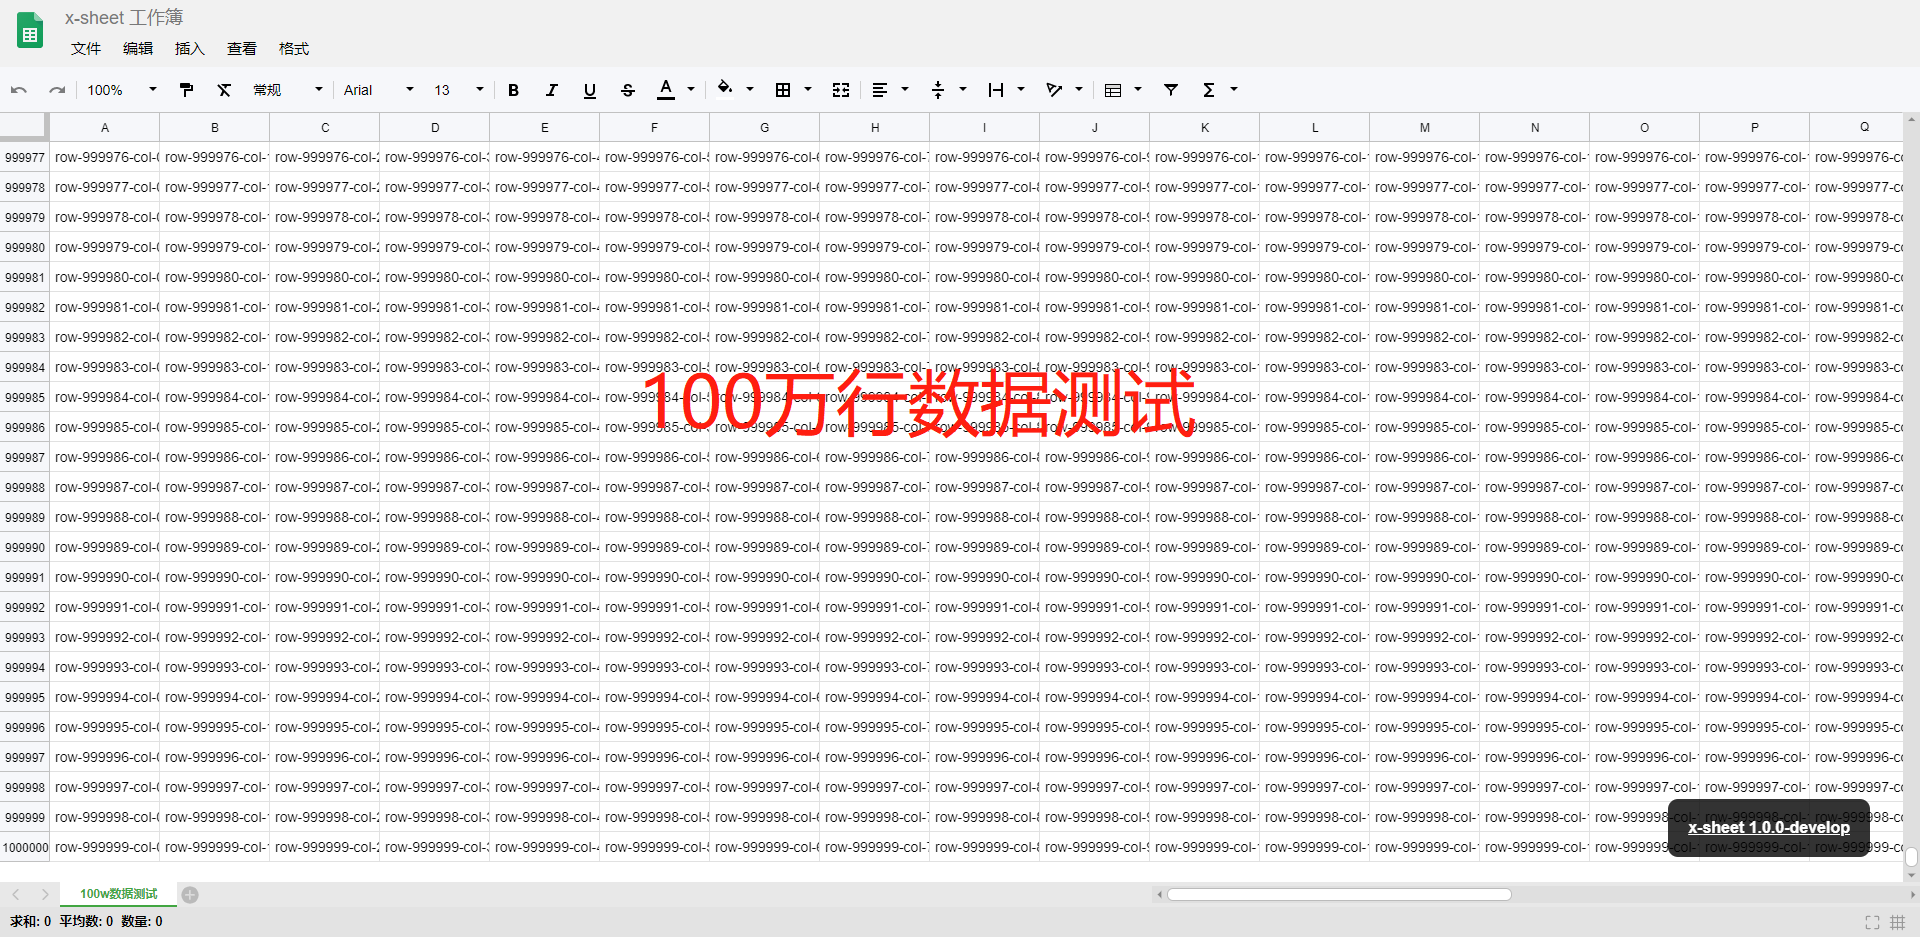 x-sheet1 million rows of data test